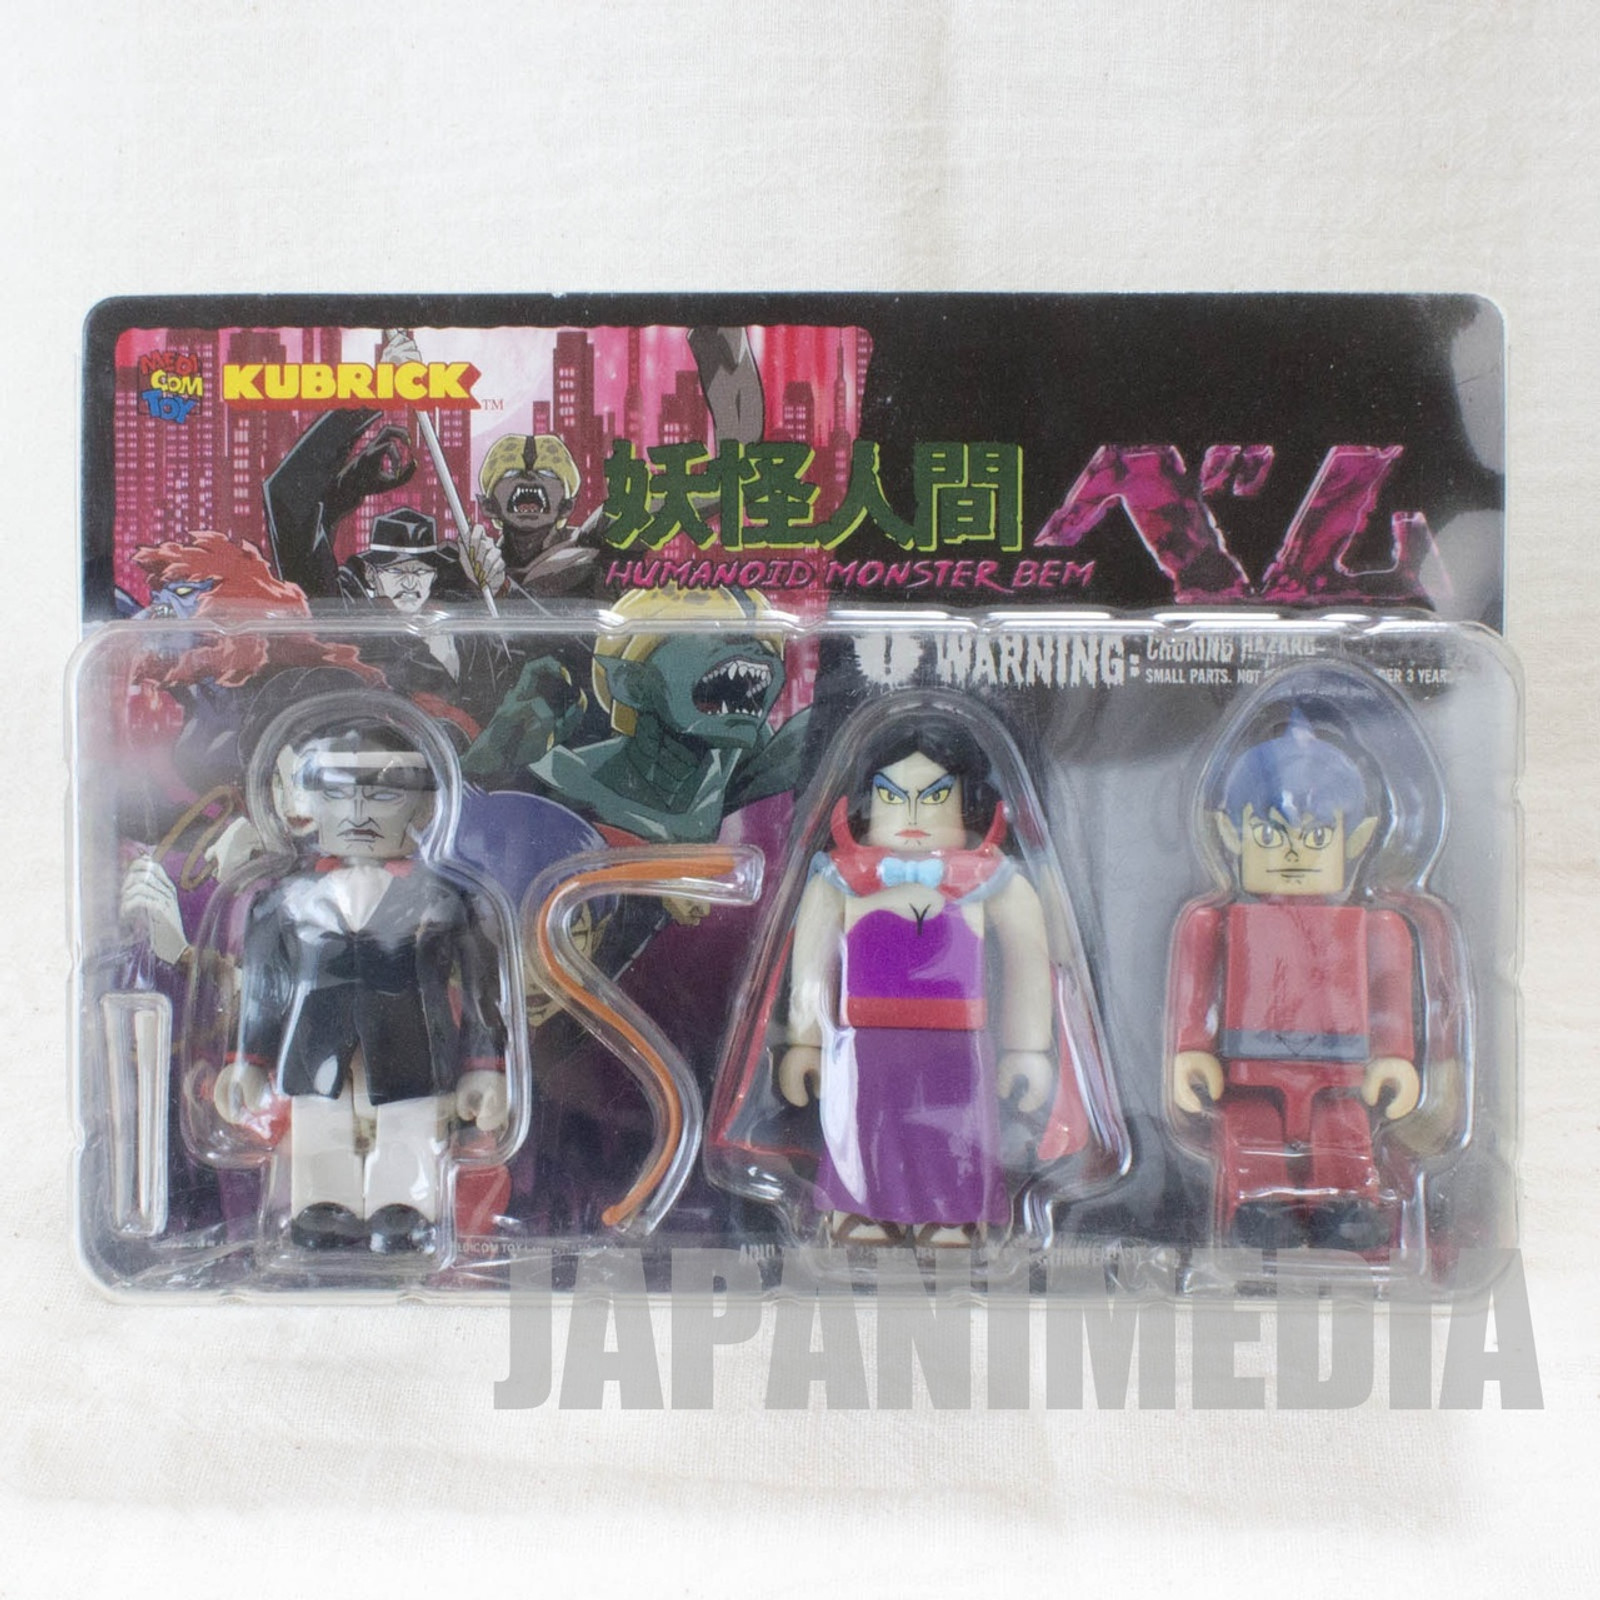 Humanoid Monster Bem Bella Belo Human Kubrick Set Figure Medicom Toy JAPAN ANIME